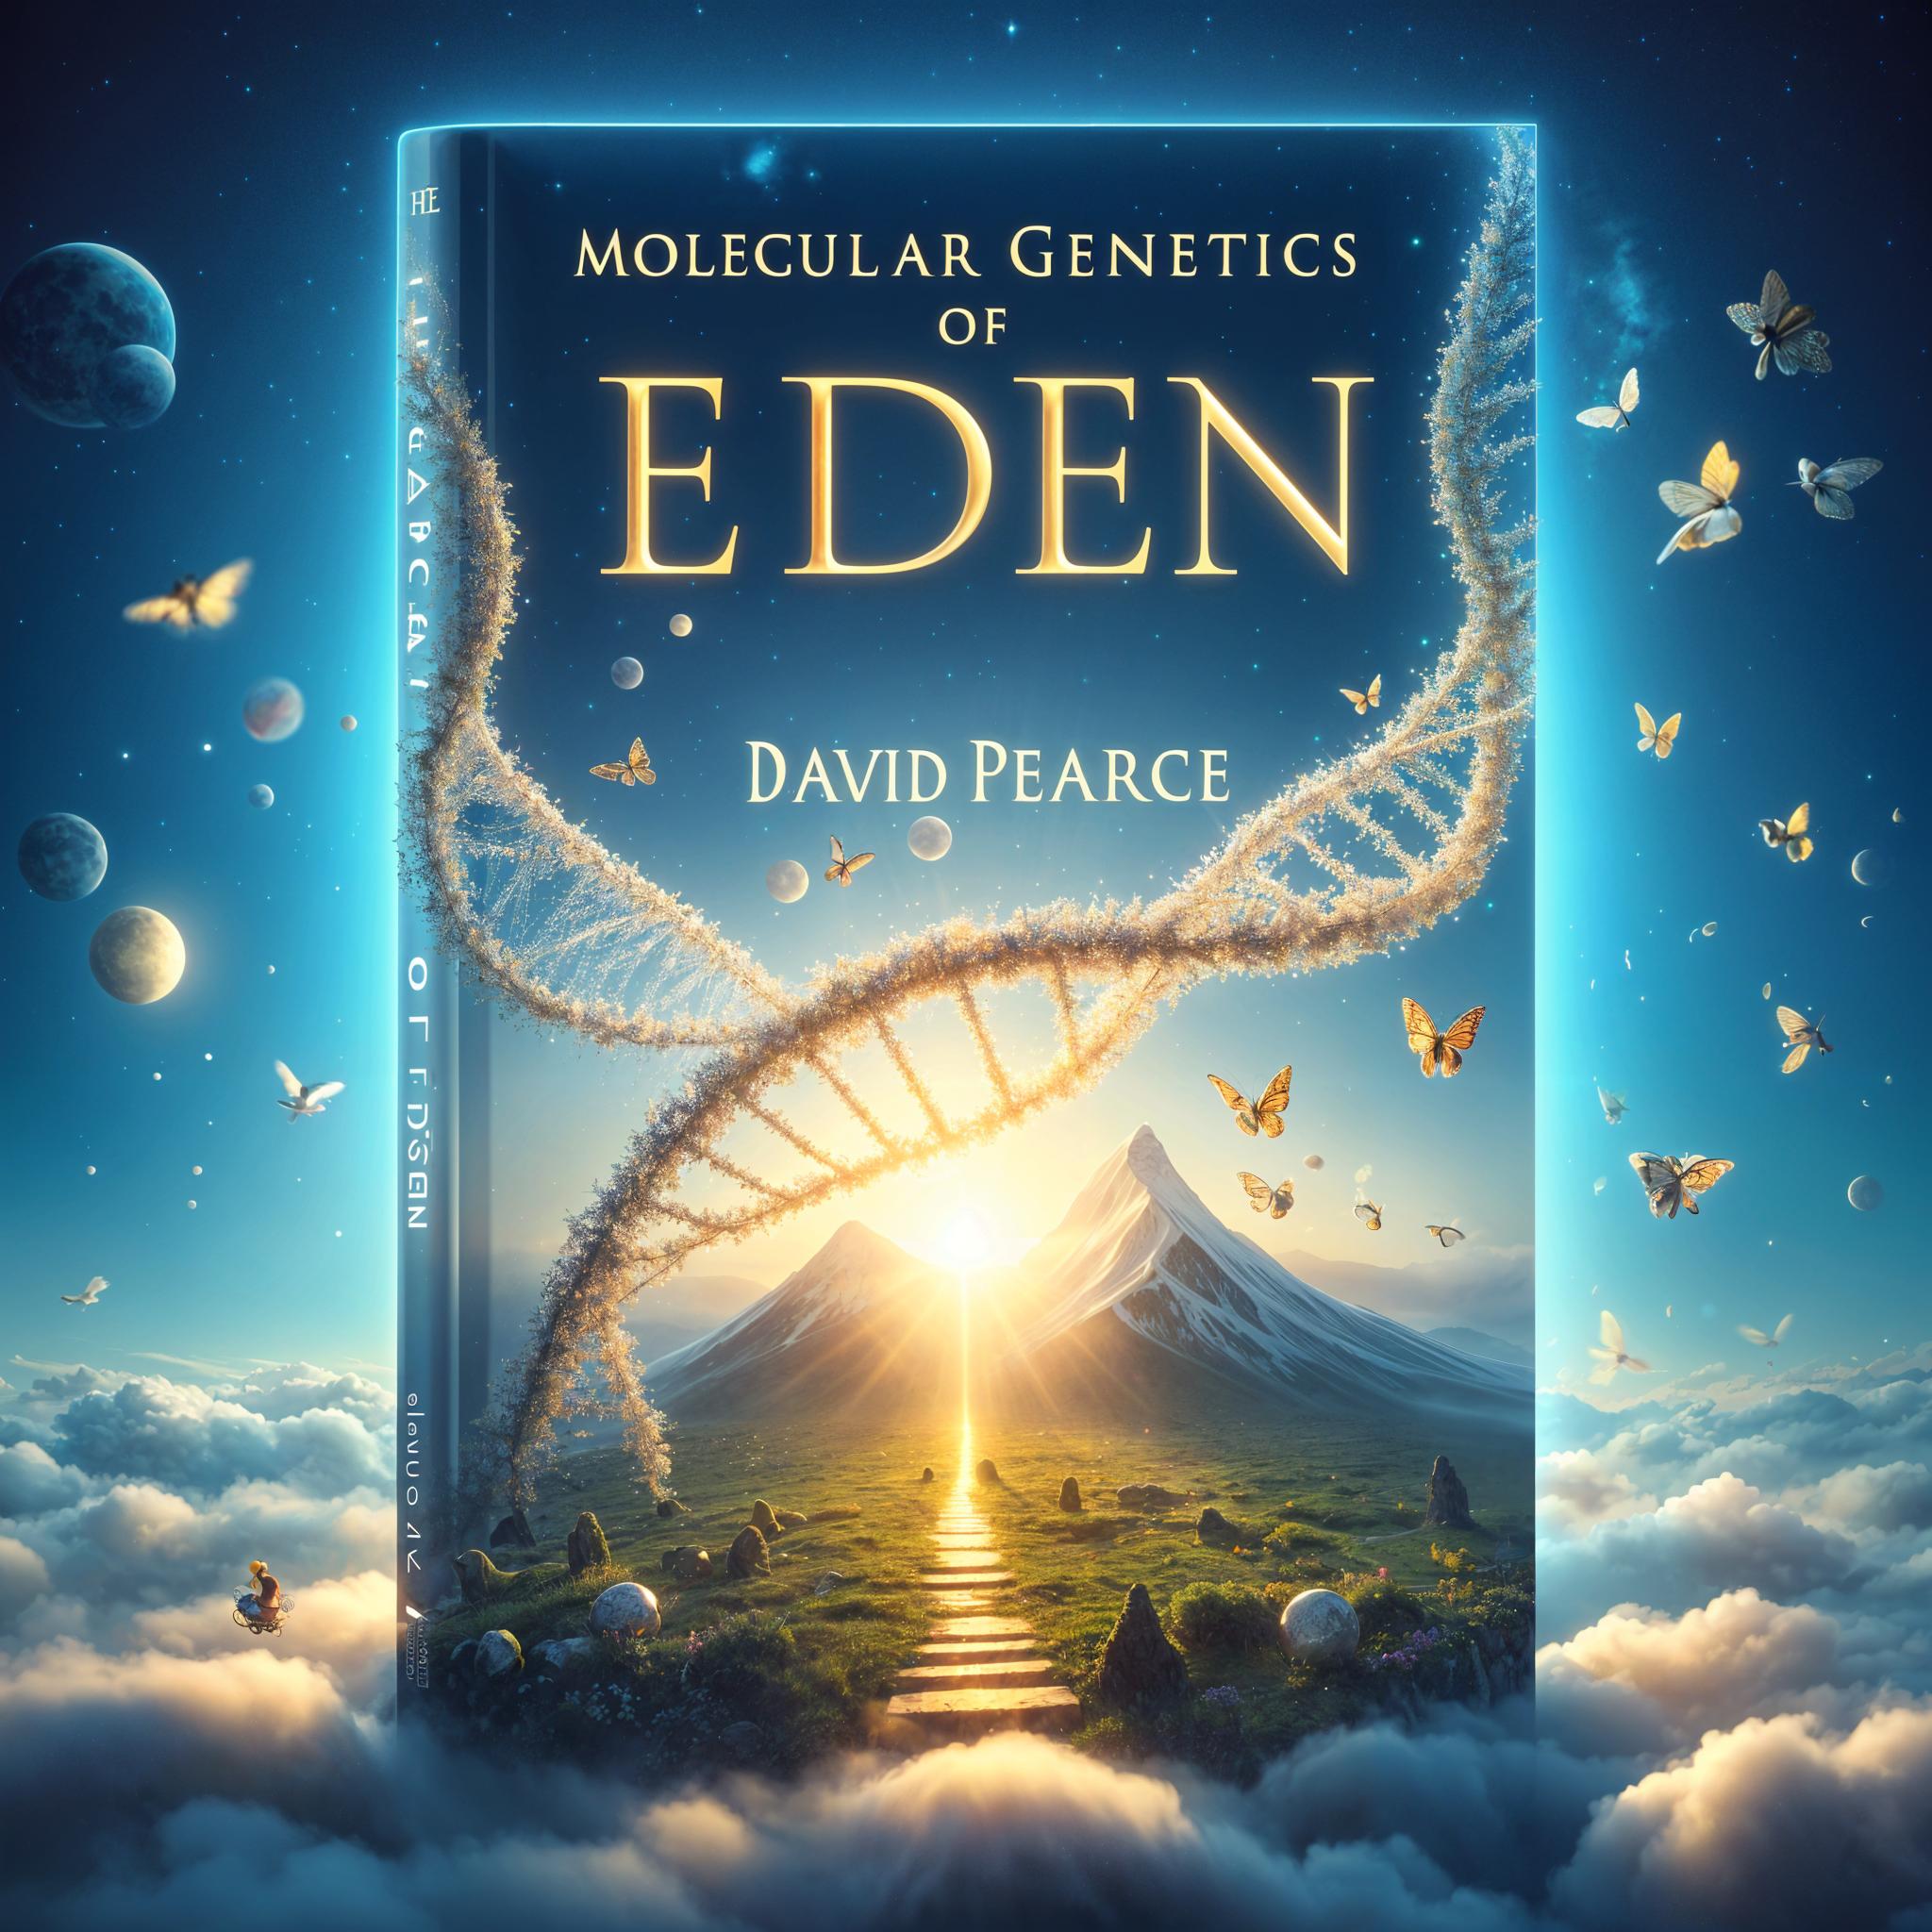 The Molecular Genetics of Eden by David Pearce